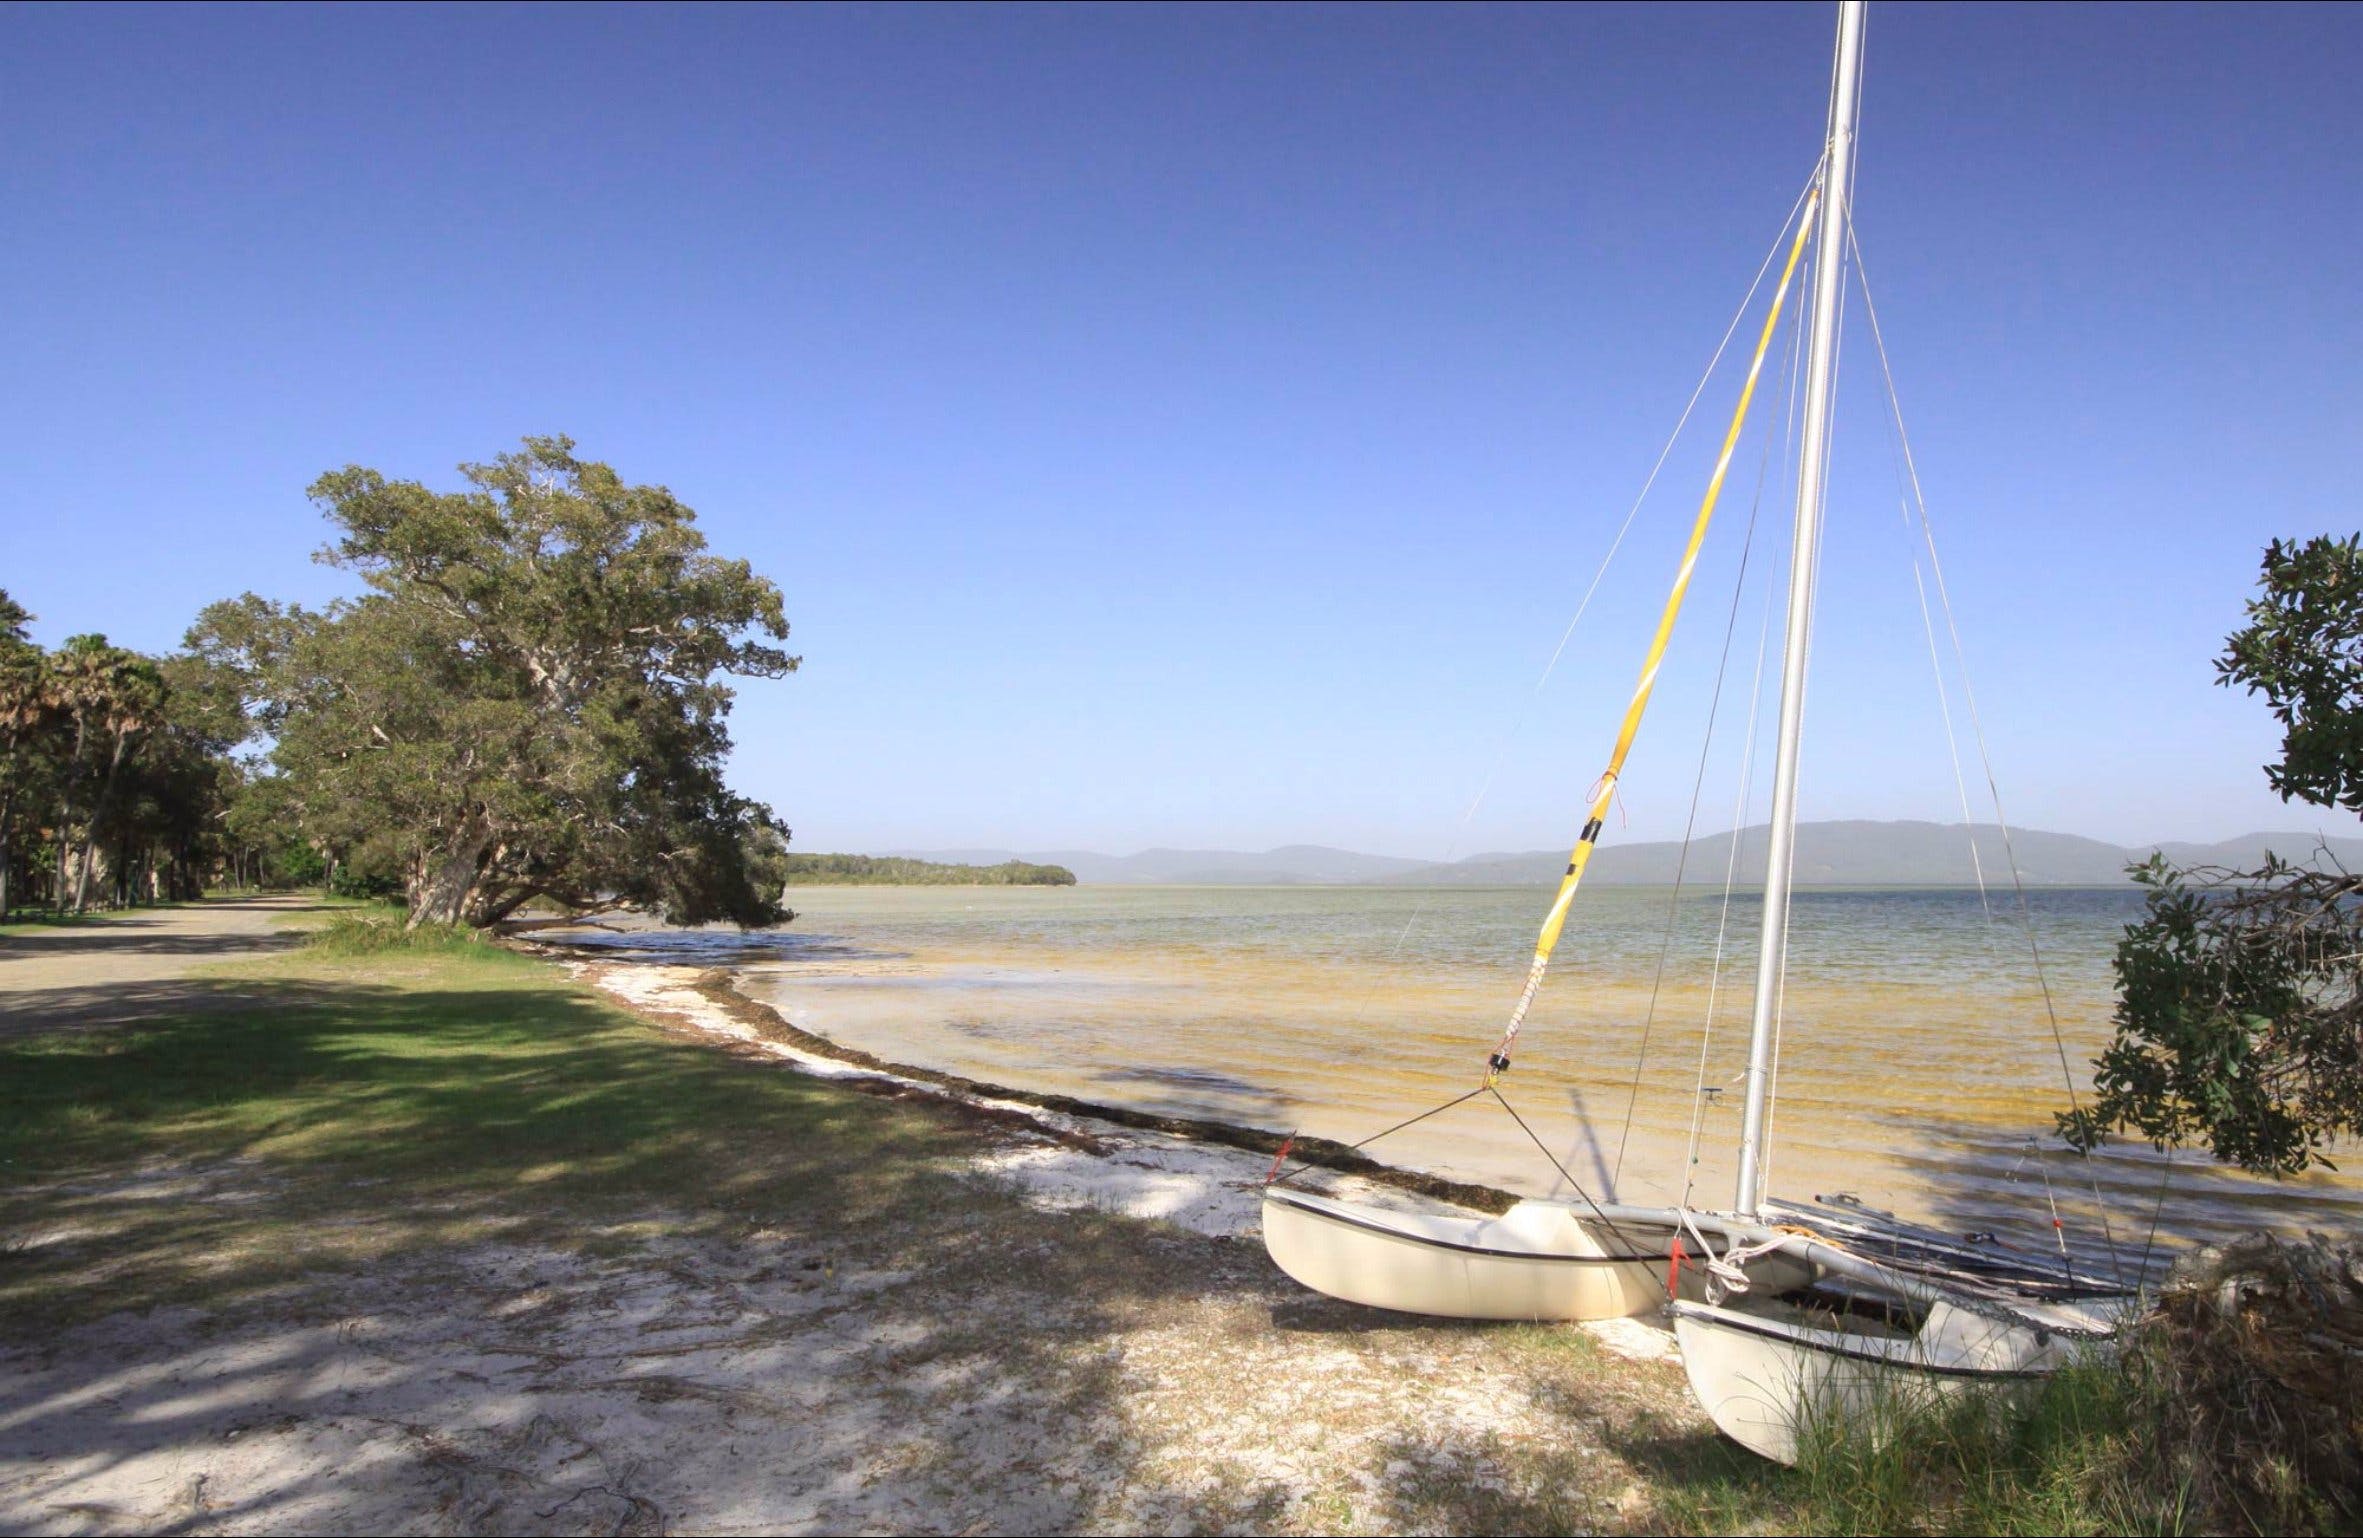 Sailing Club picnic area - Accommodation Nelson Bay